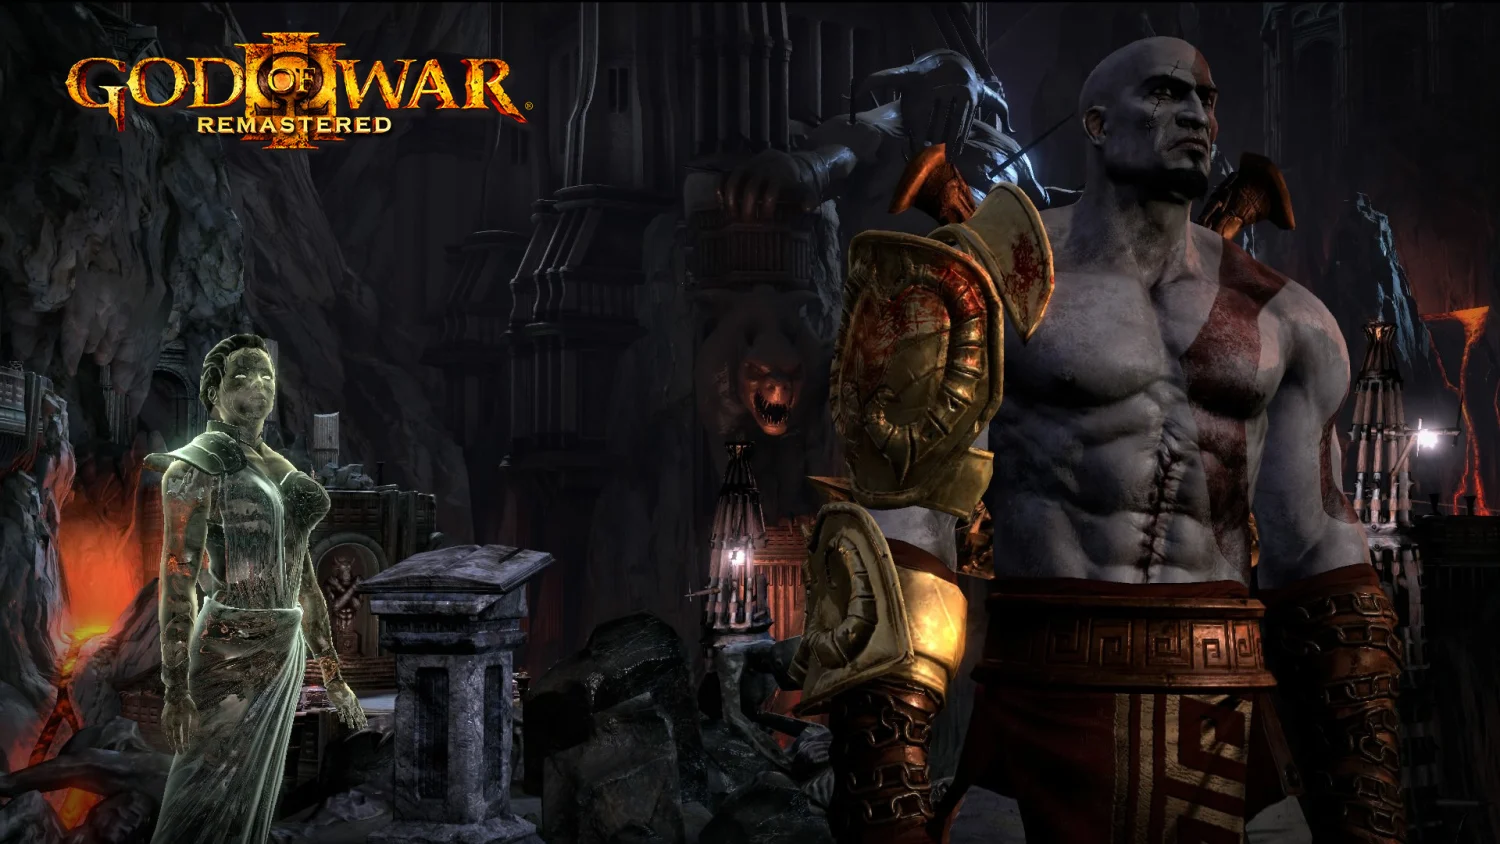 Jogo God Of War III Remasterizado PS4